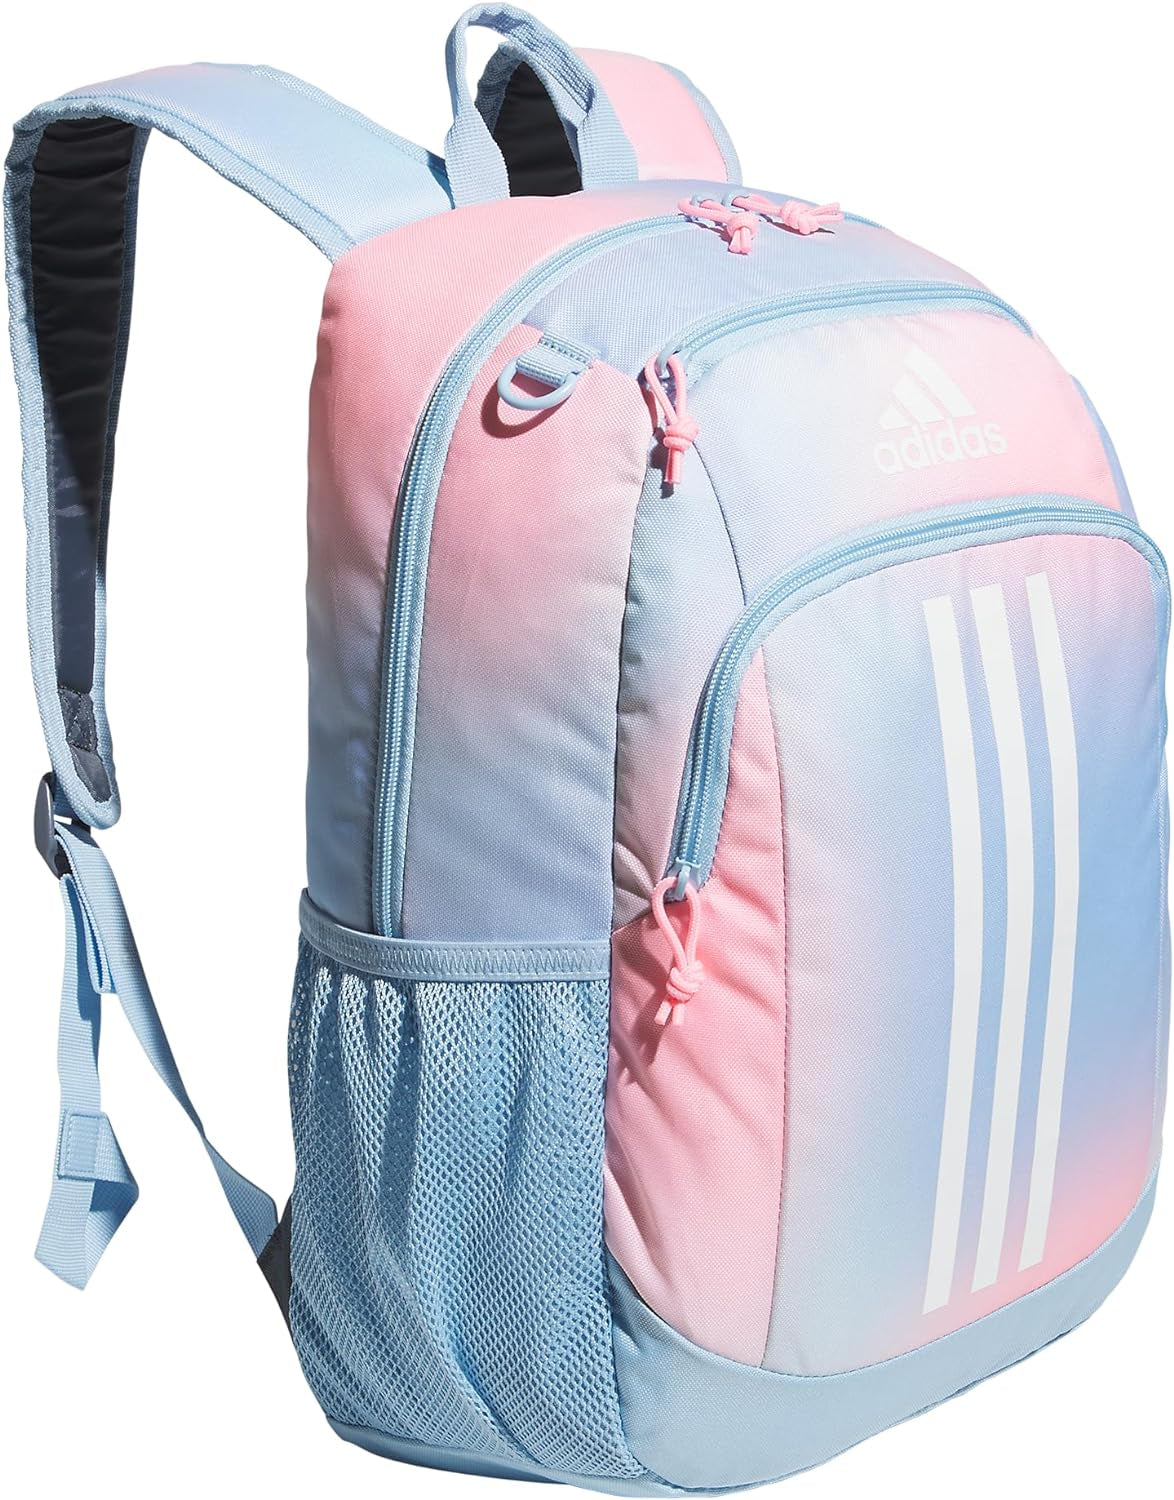 Creator 2 Backpack, Speckle Black/Bliss Pink/Black, One Size